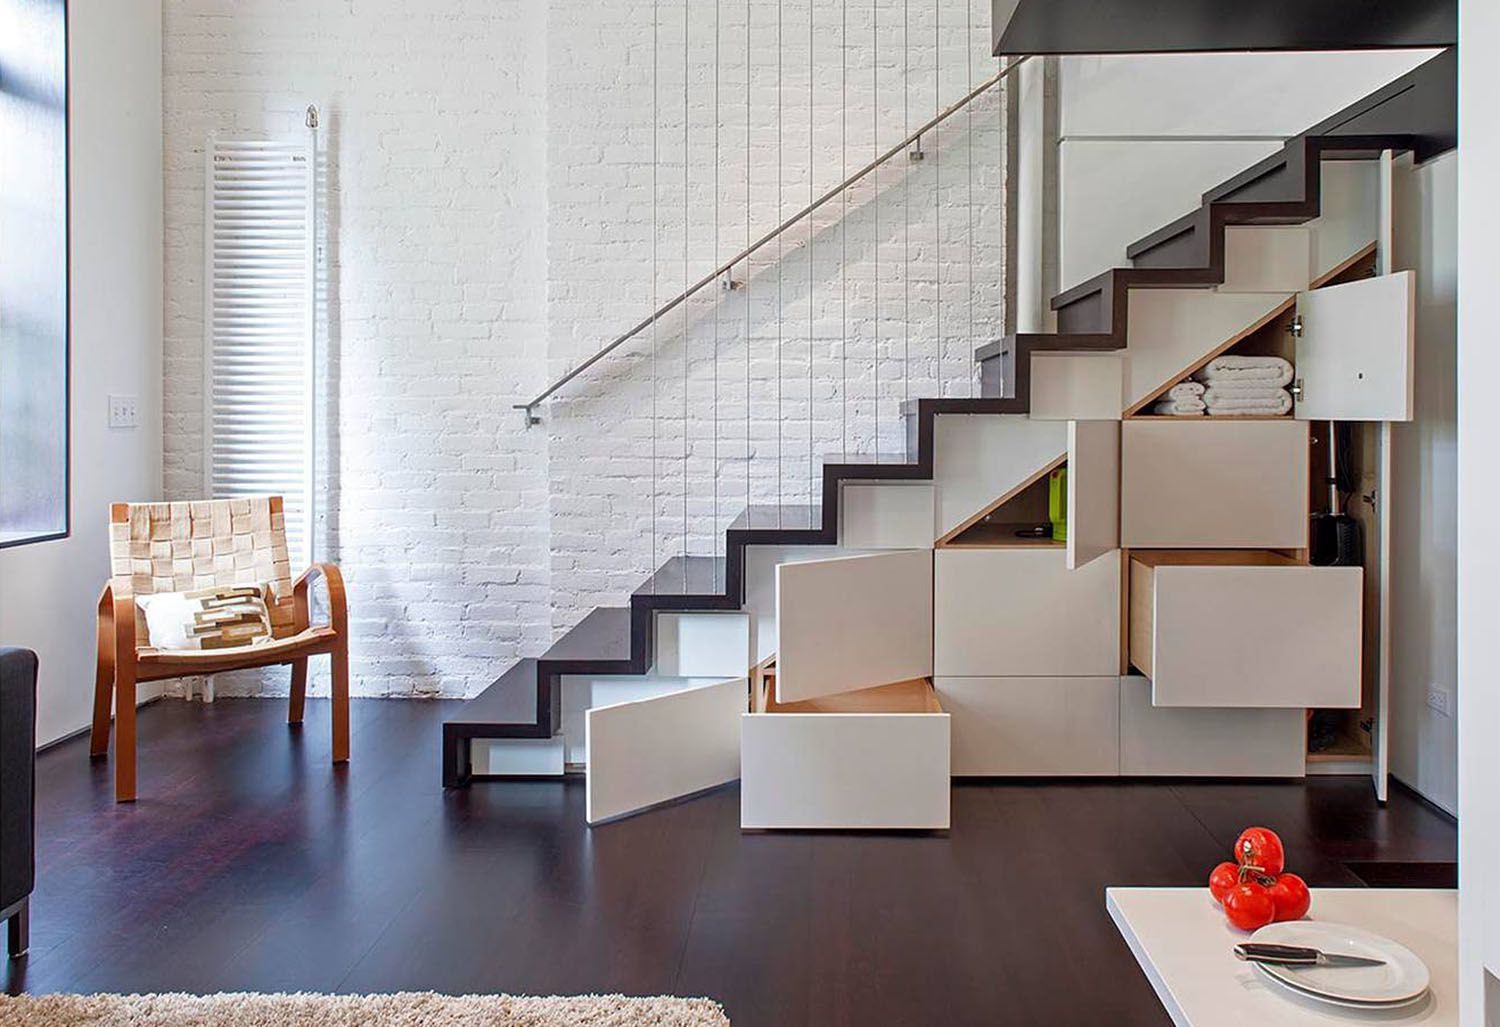 Modern staircase with storage in stylish interior.